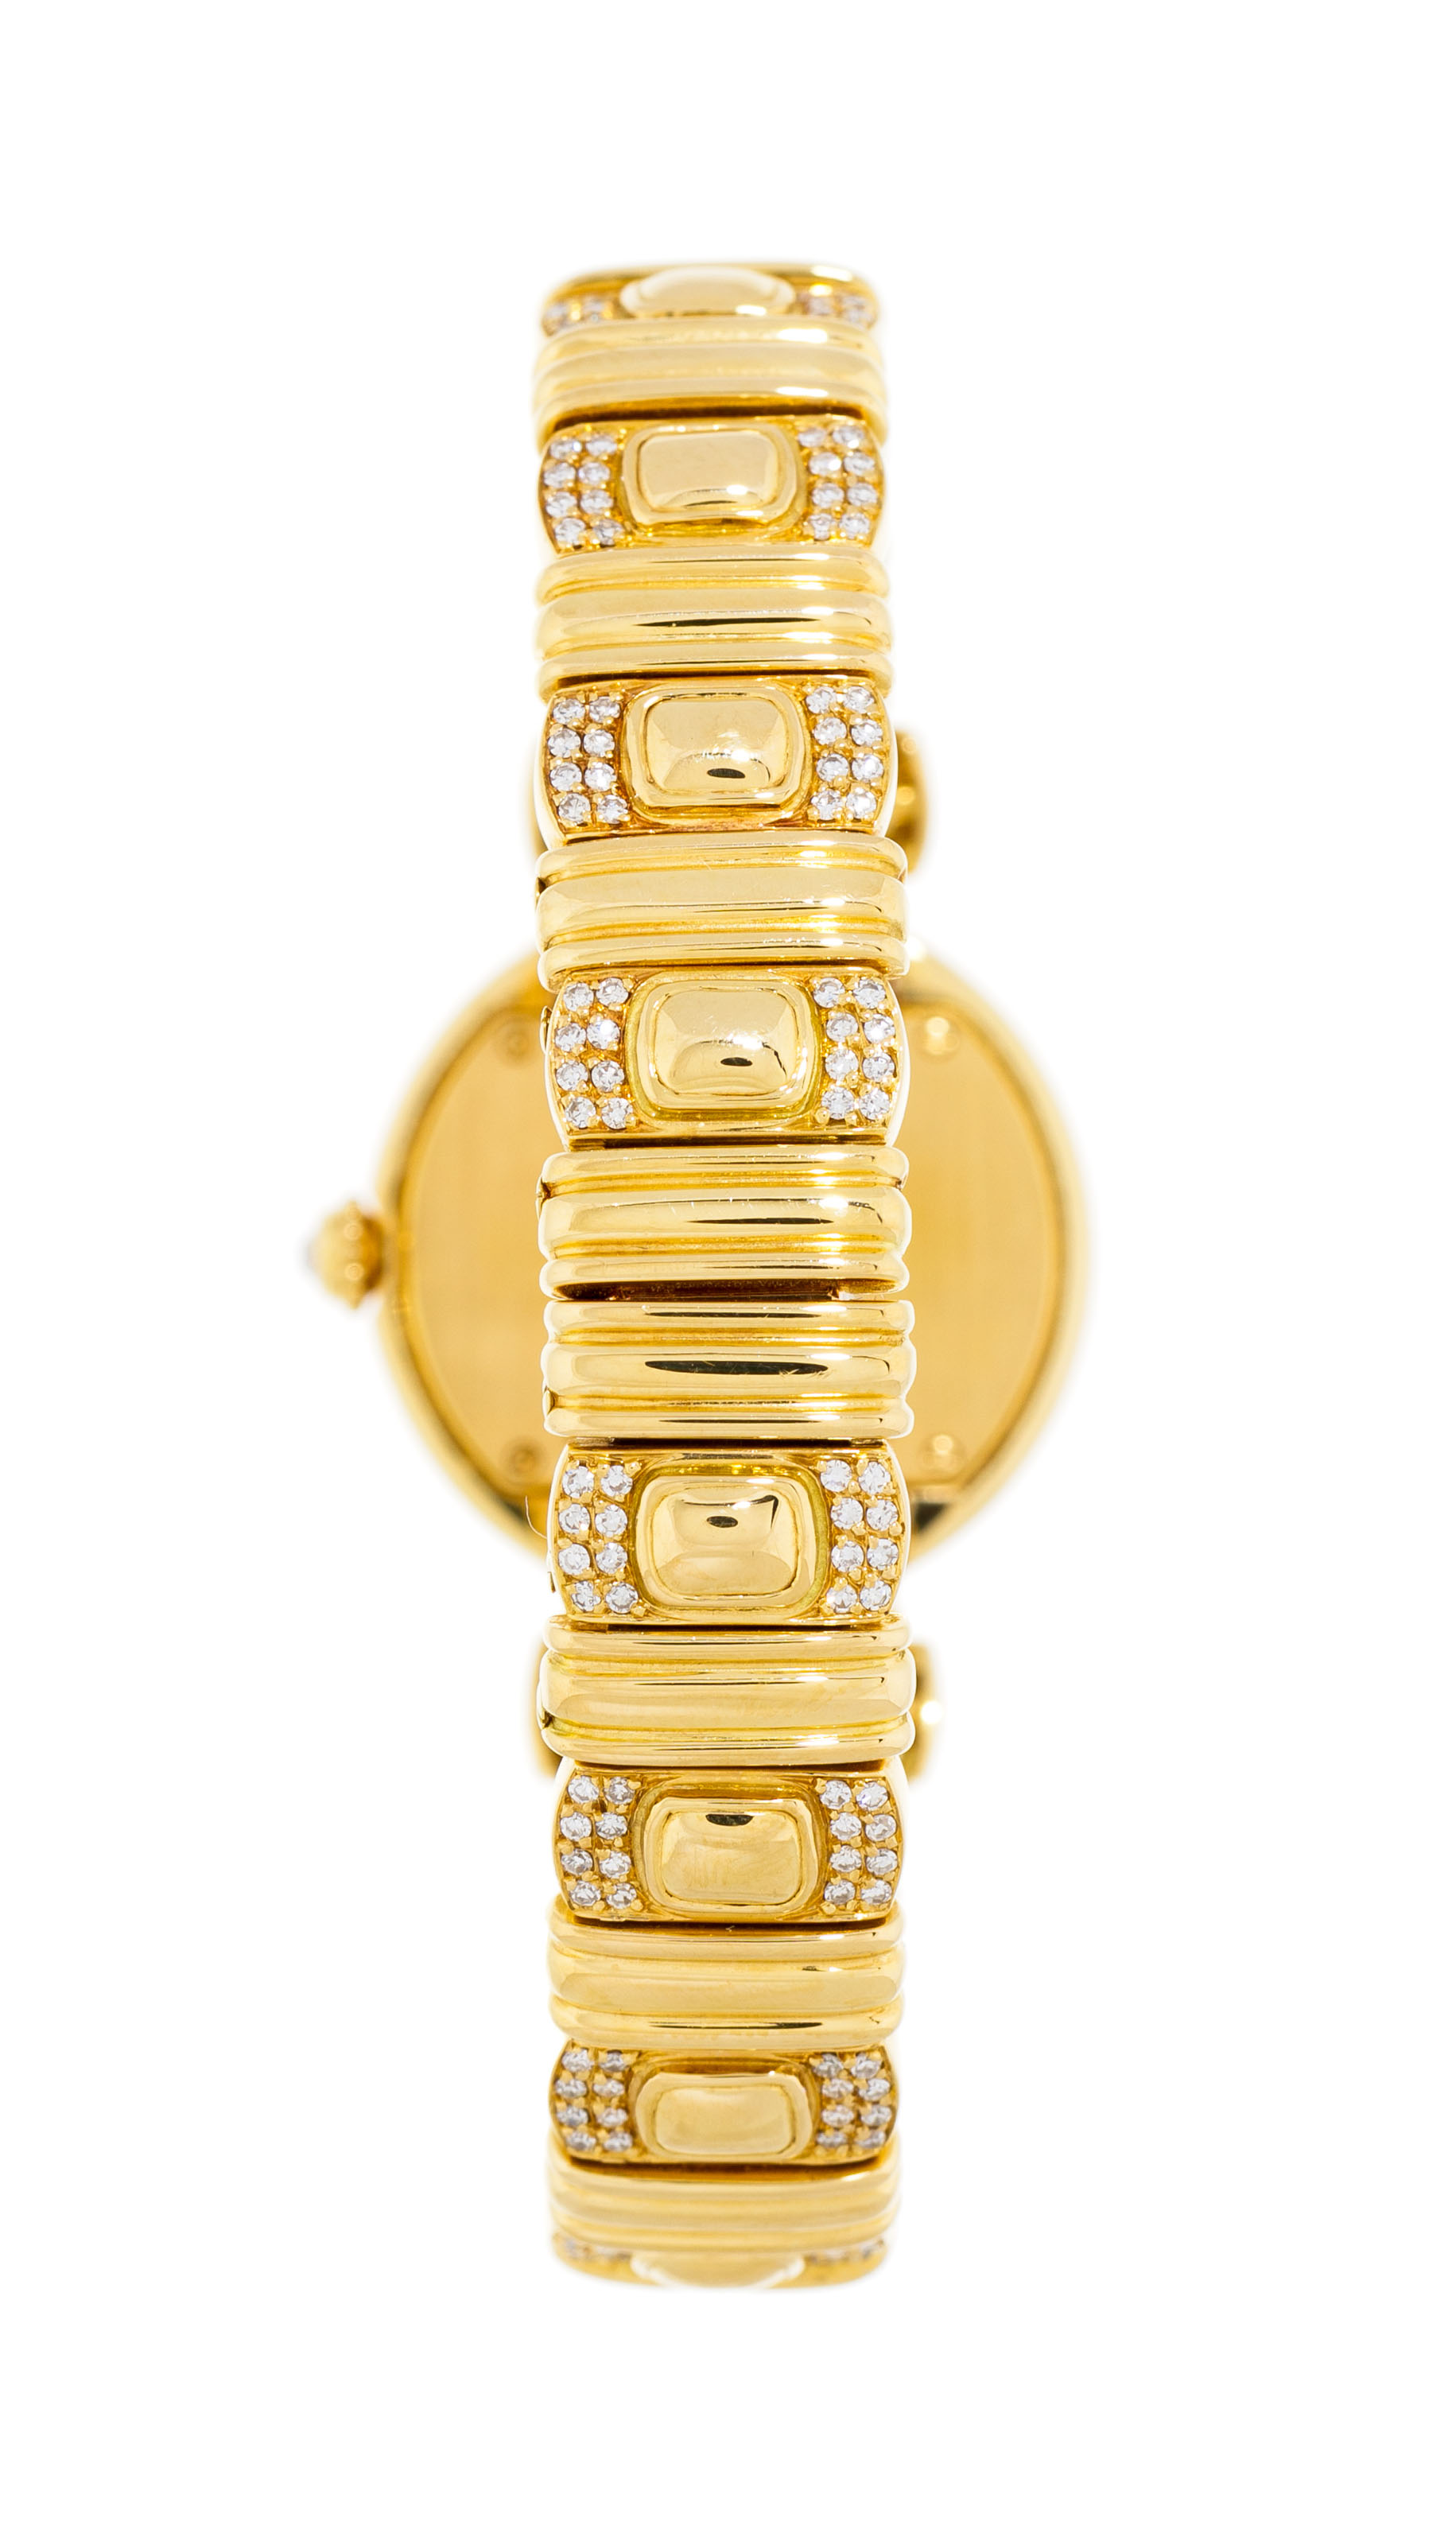 Cartier, Ellipse, montre-bracelet en or 750 sertie de diamants, transformable en bracelet - Image 3 of 6